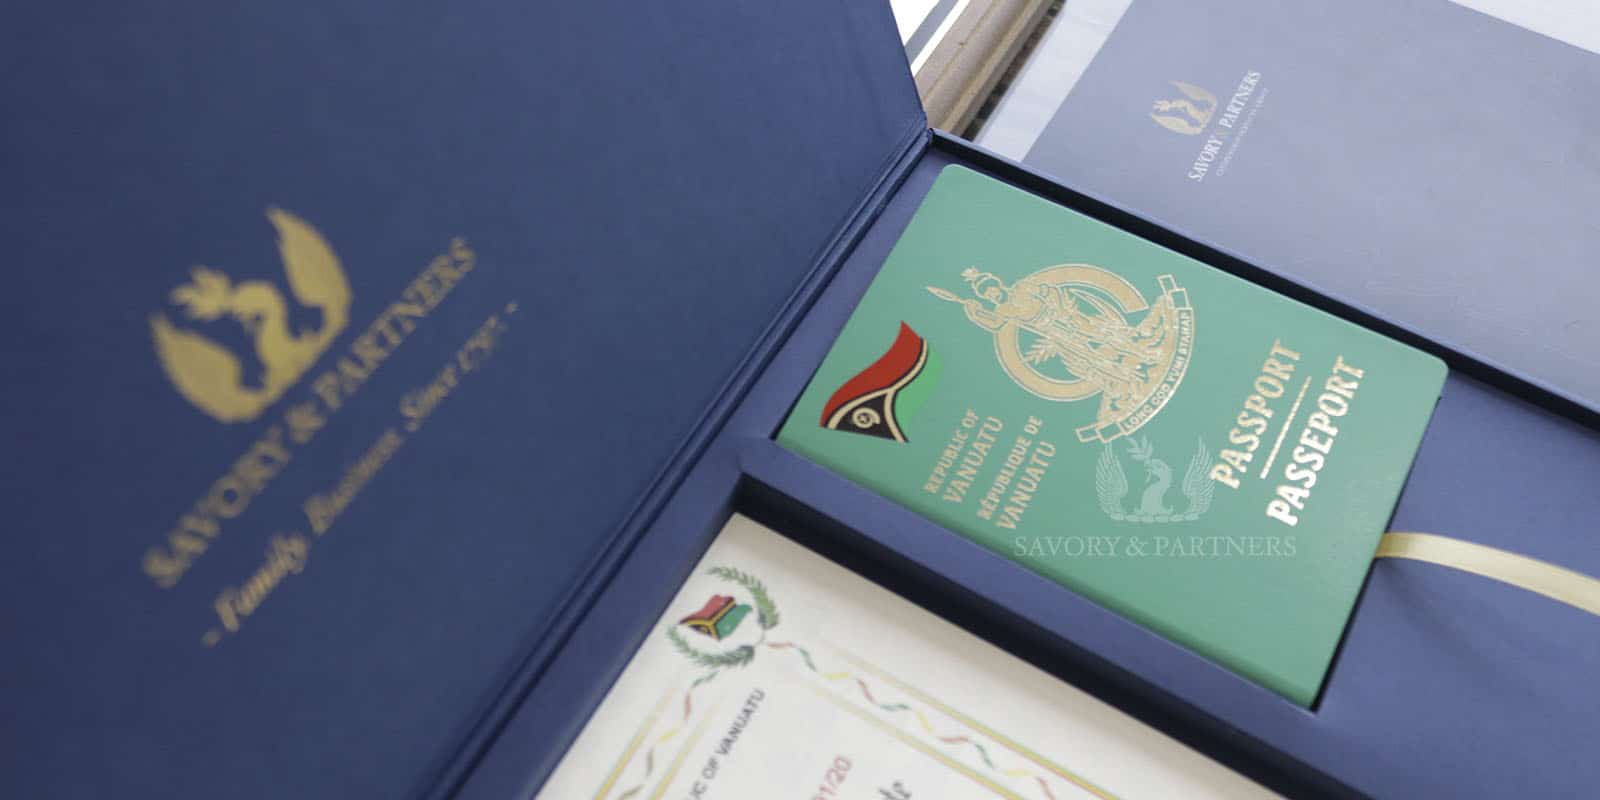 Vanuatu passport at Savory & Partners offices in Dubai.